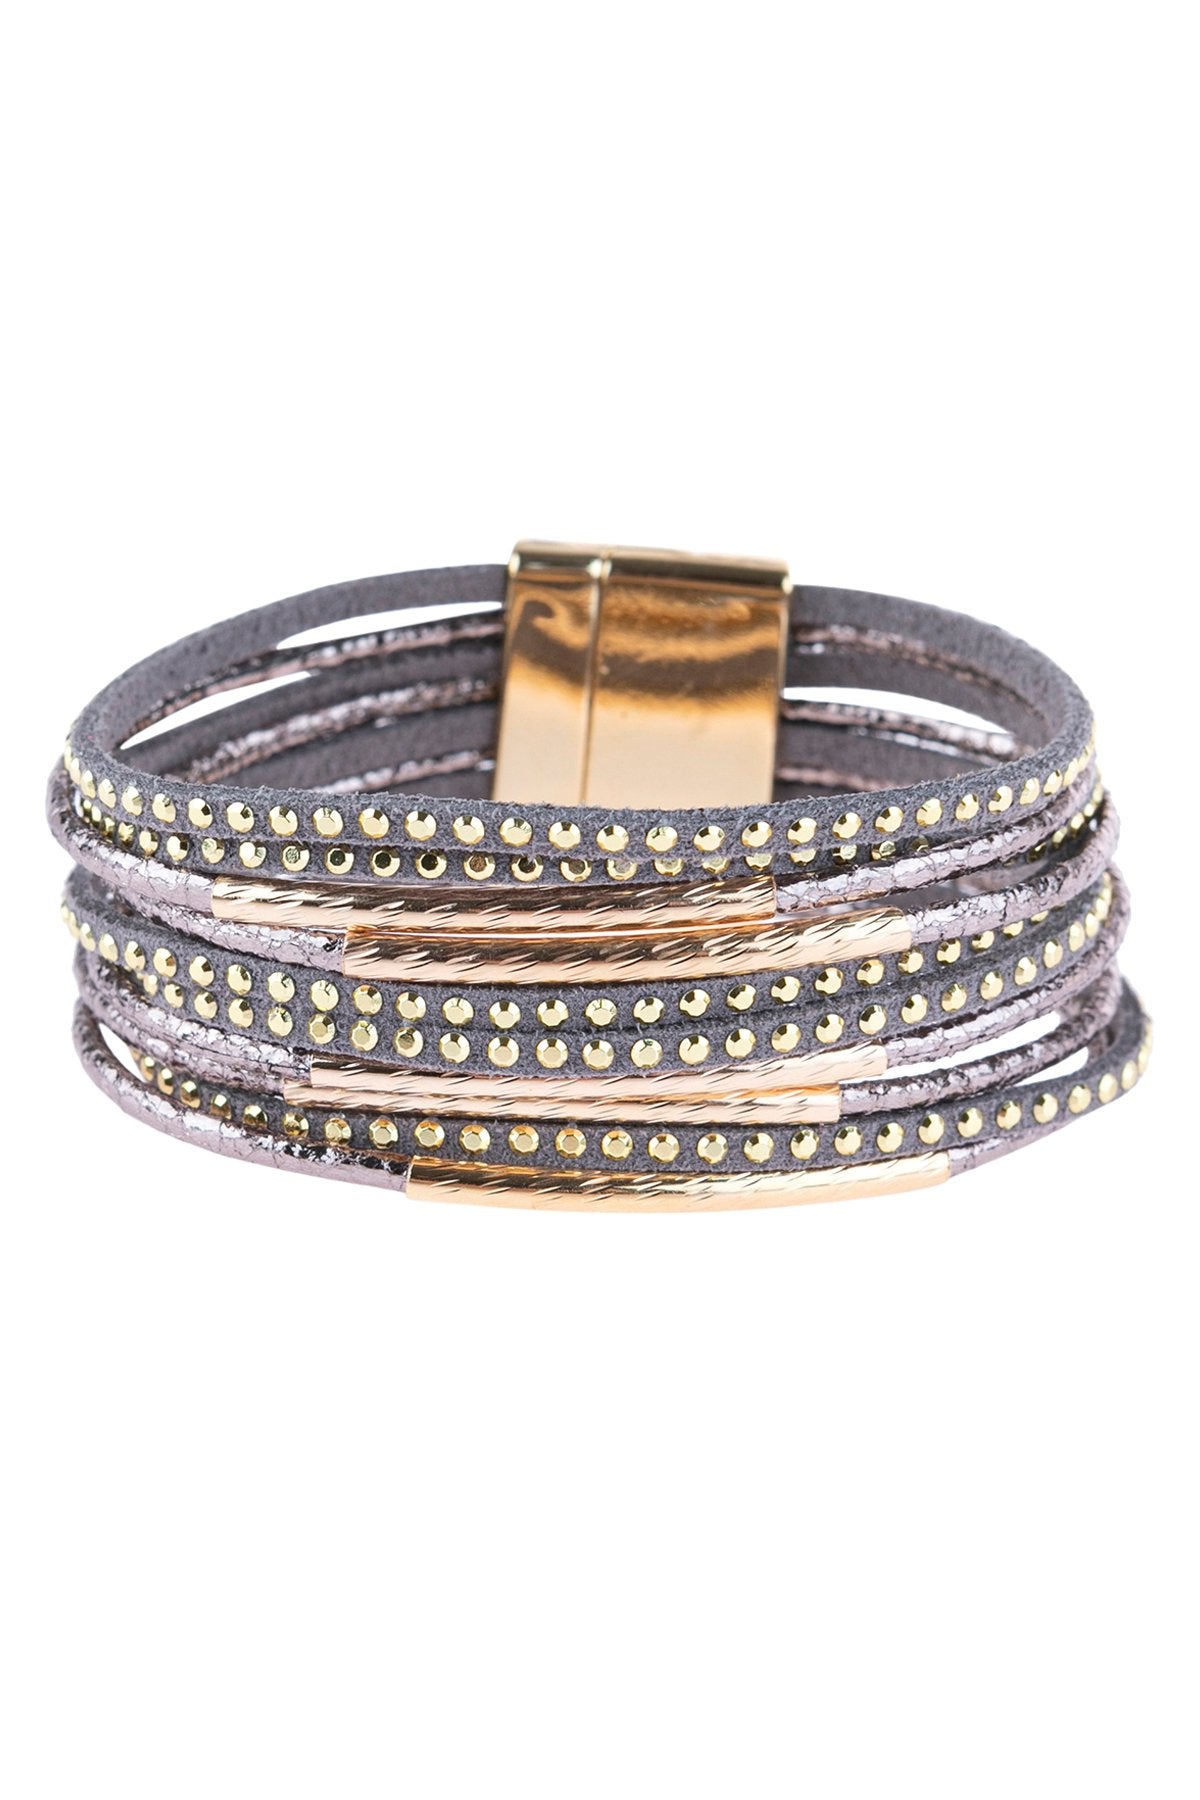 Hdb3067 - Multiline Leather Magnetic Bracelet - LOLA LUXE